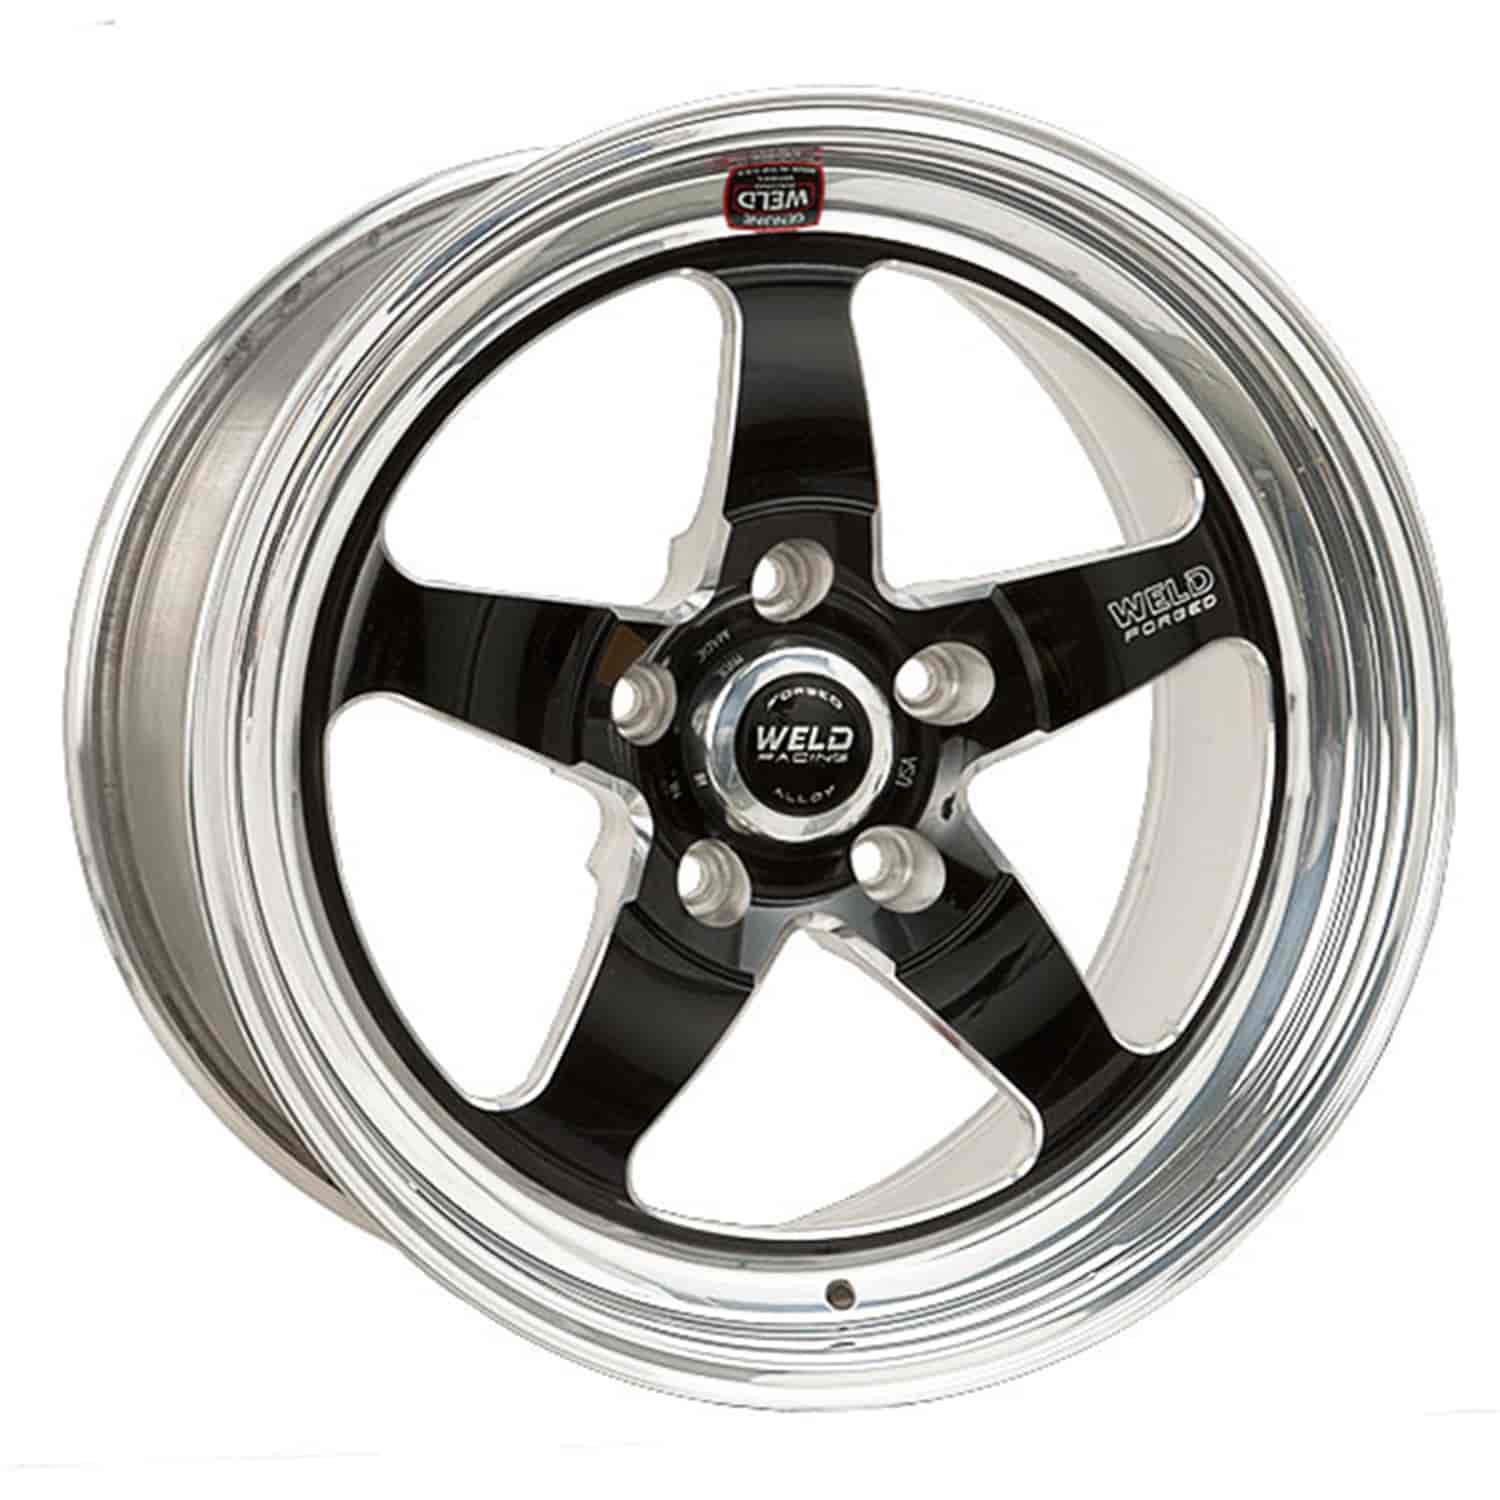 RT-S Series Wheel Size: 18" x 10.5" Bolt Circle: 5 x 4-1/2" Rear Spacing: 7.70"